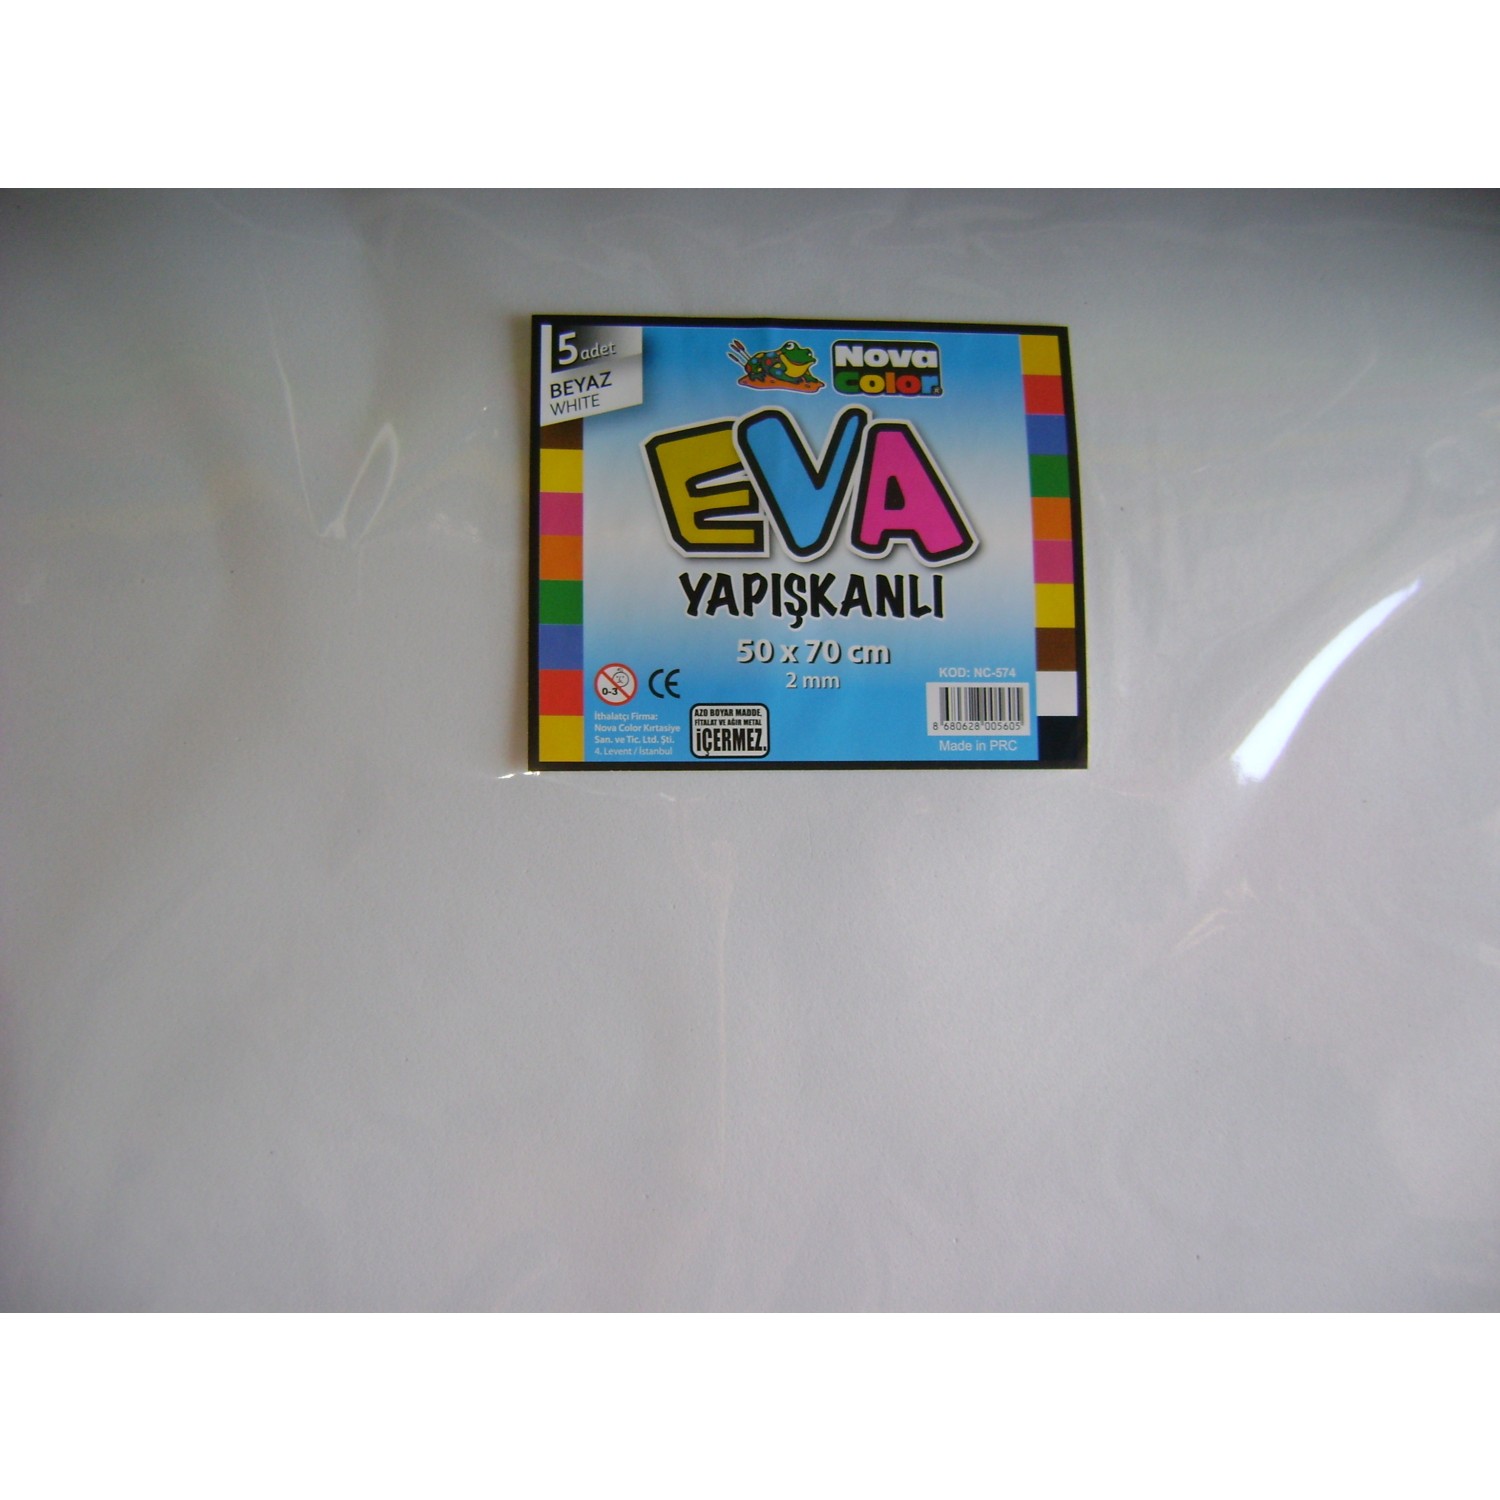 Nova Color Yapışkanlı Eva 2 Mm 50*70 Cm Beyaz 5'li Paket